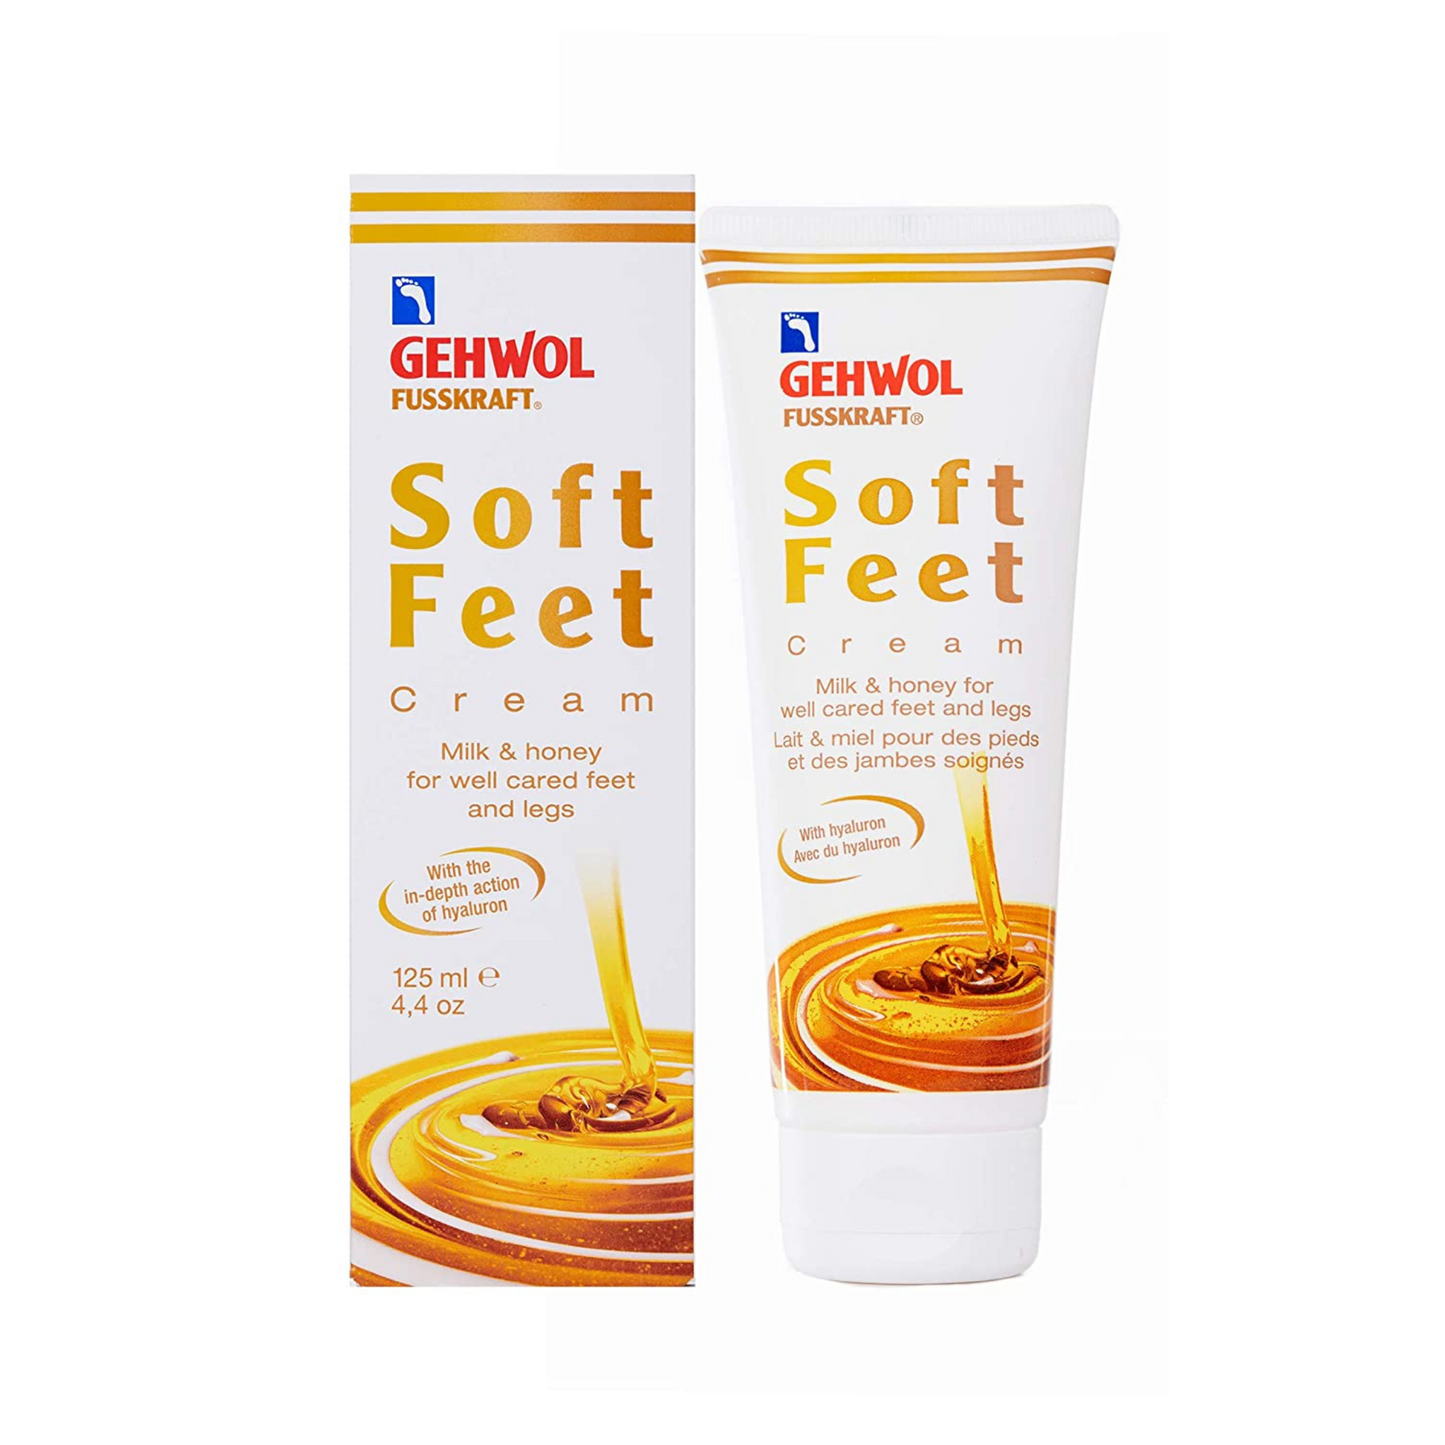 Primary Image of Gehwol Fusskraft Soft Feet Cream (125 ml)